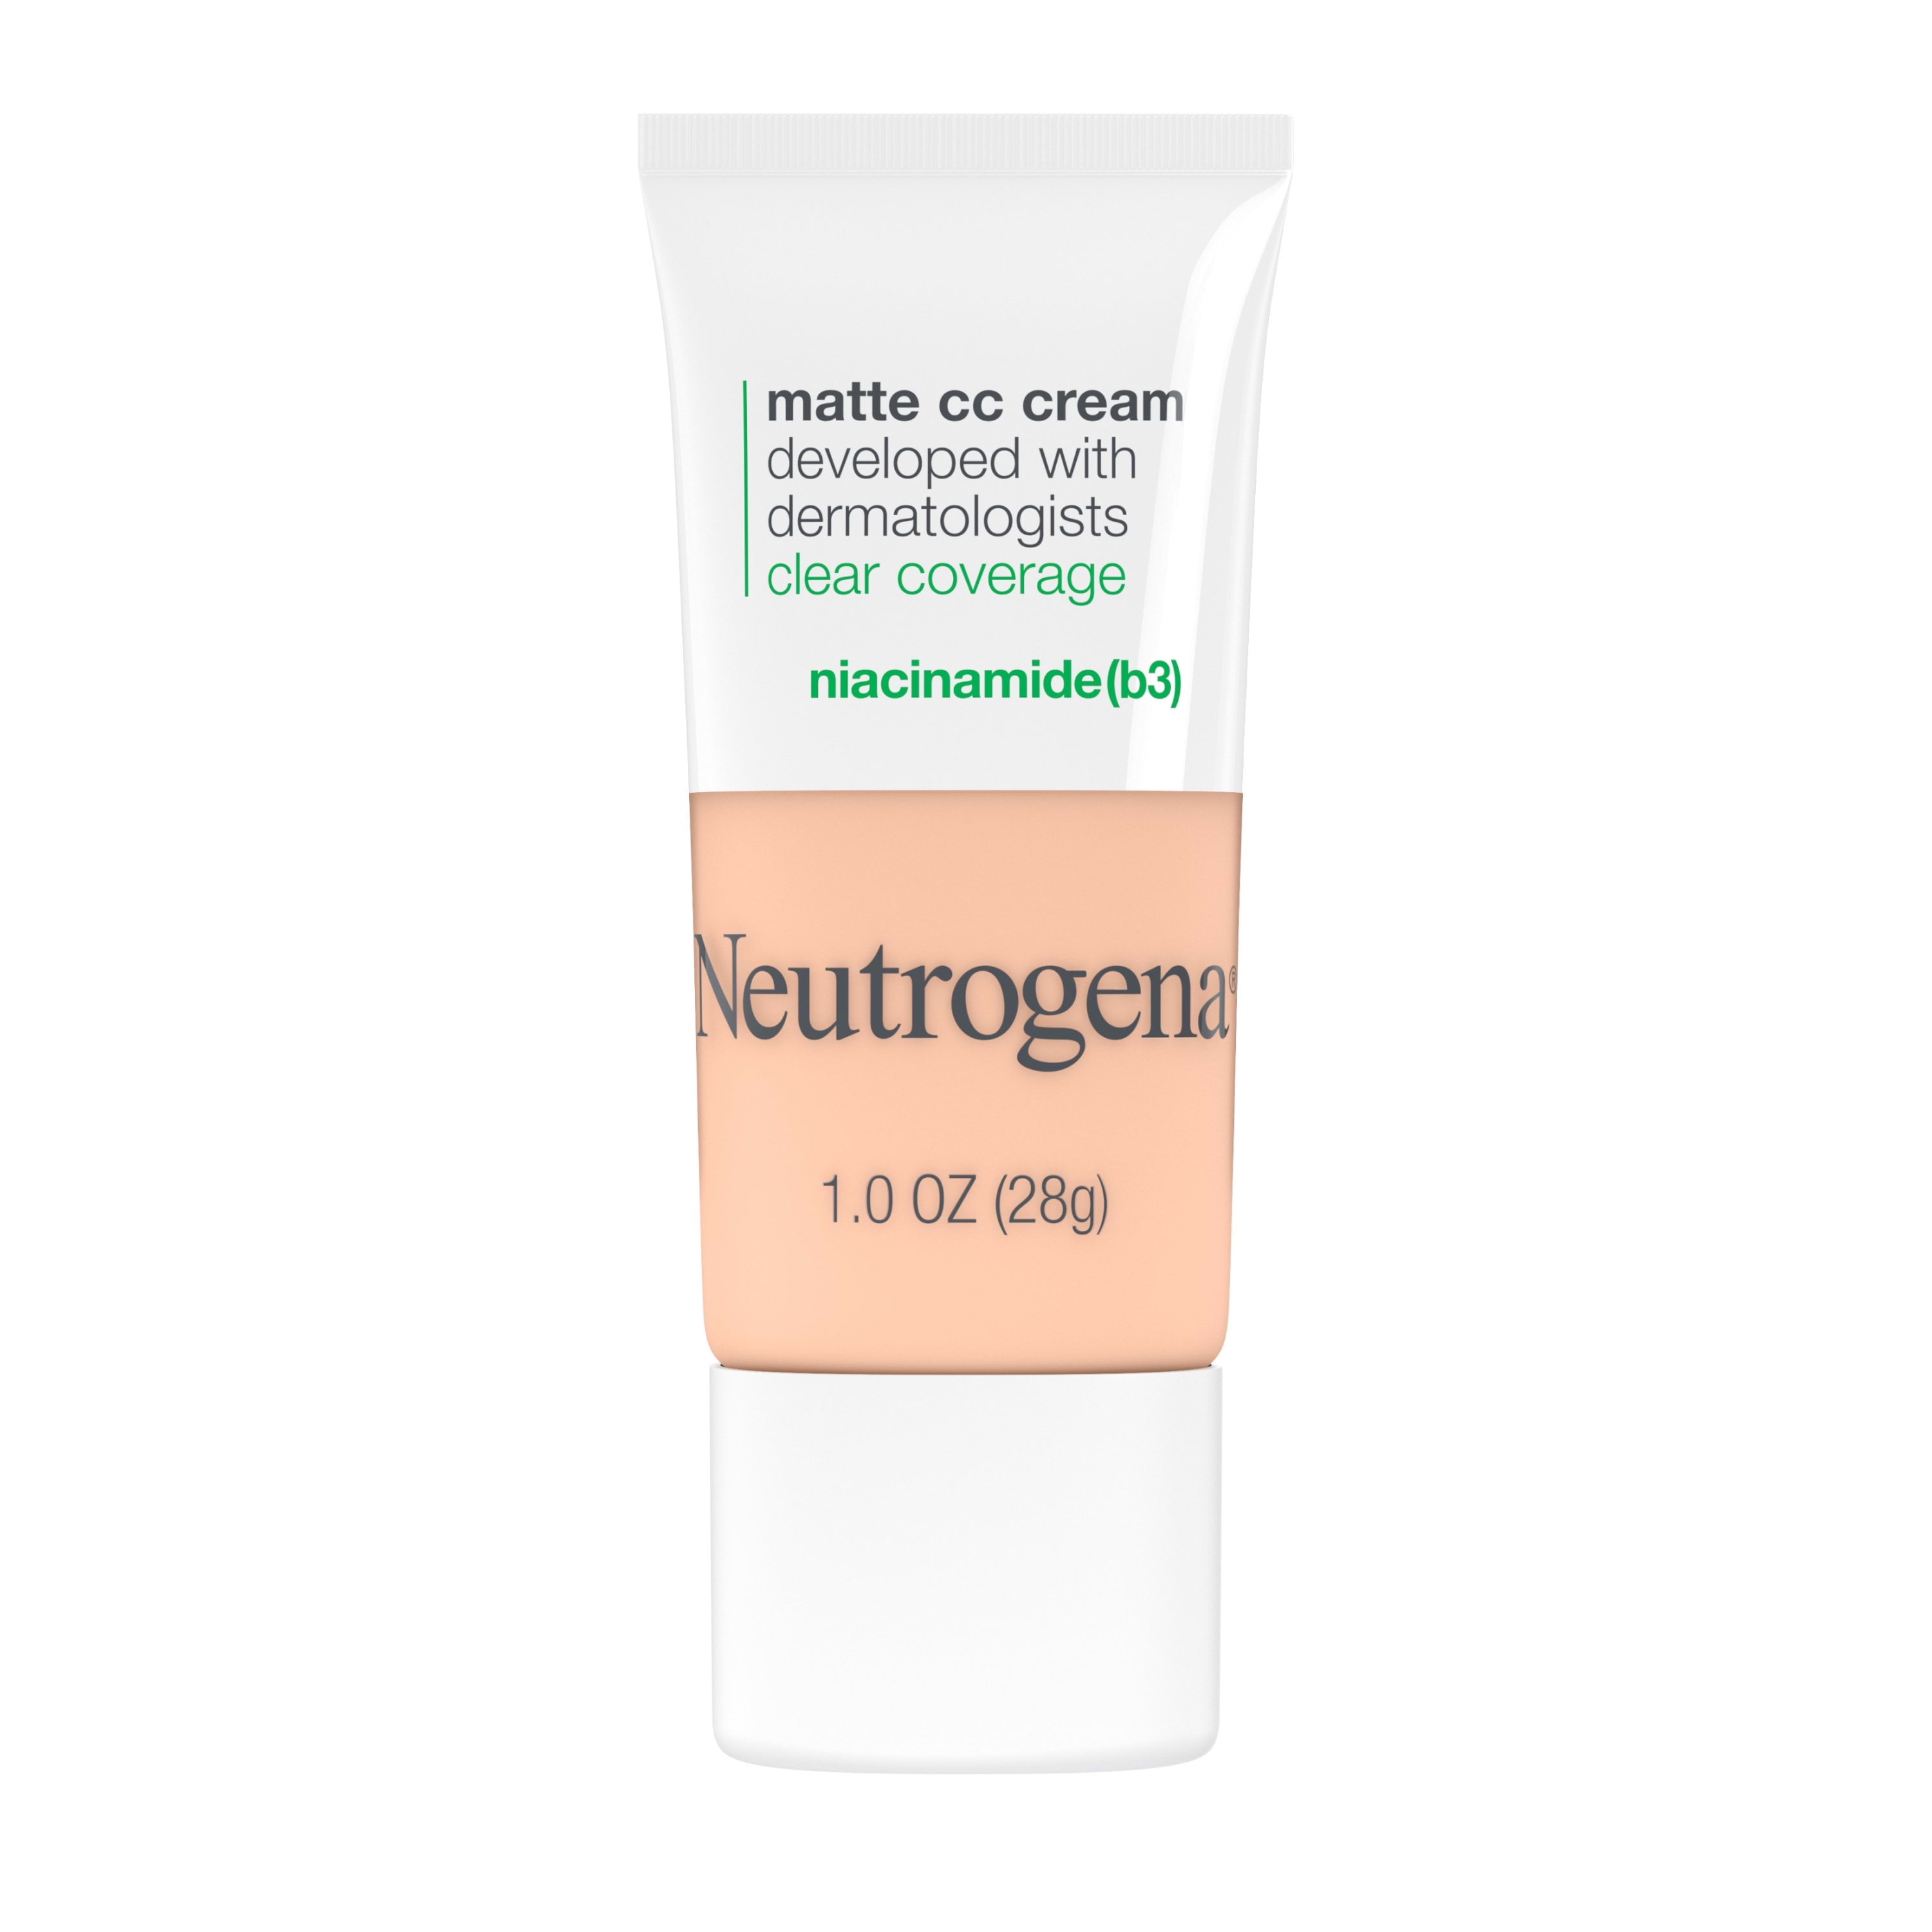 Neutrogena Clear Coverage Flawless Matte CC Cream, Shell, 1 oz